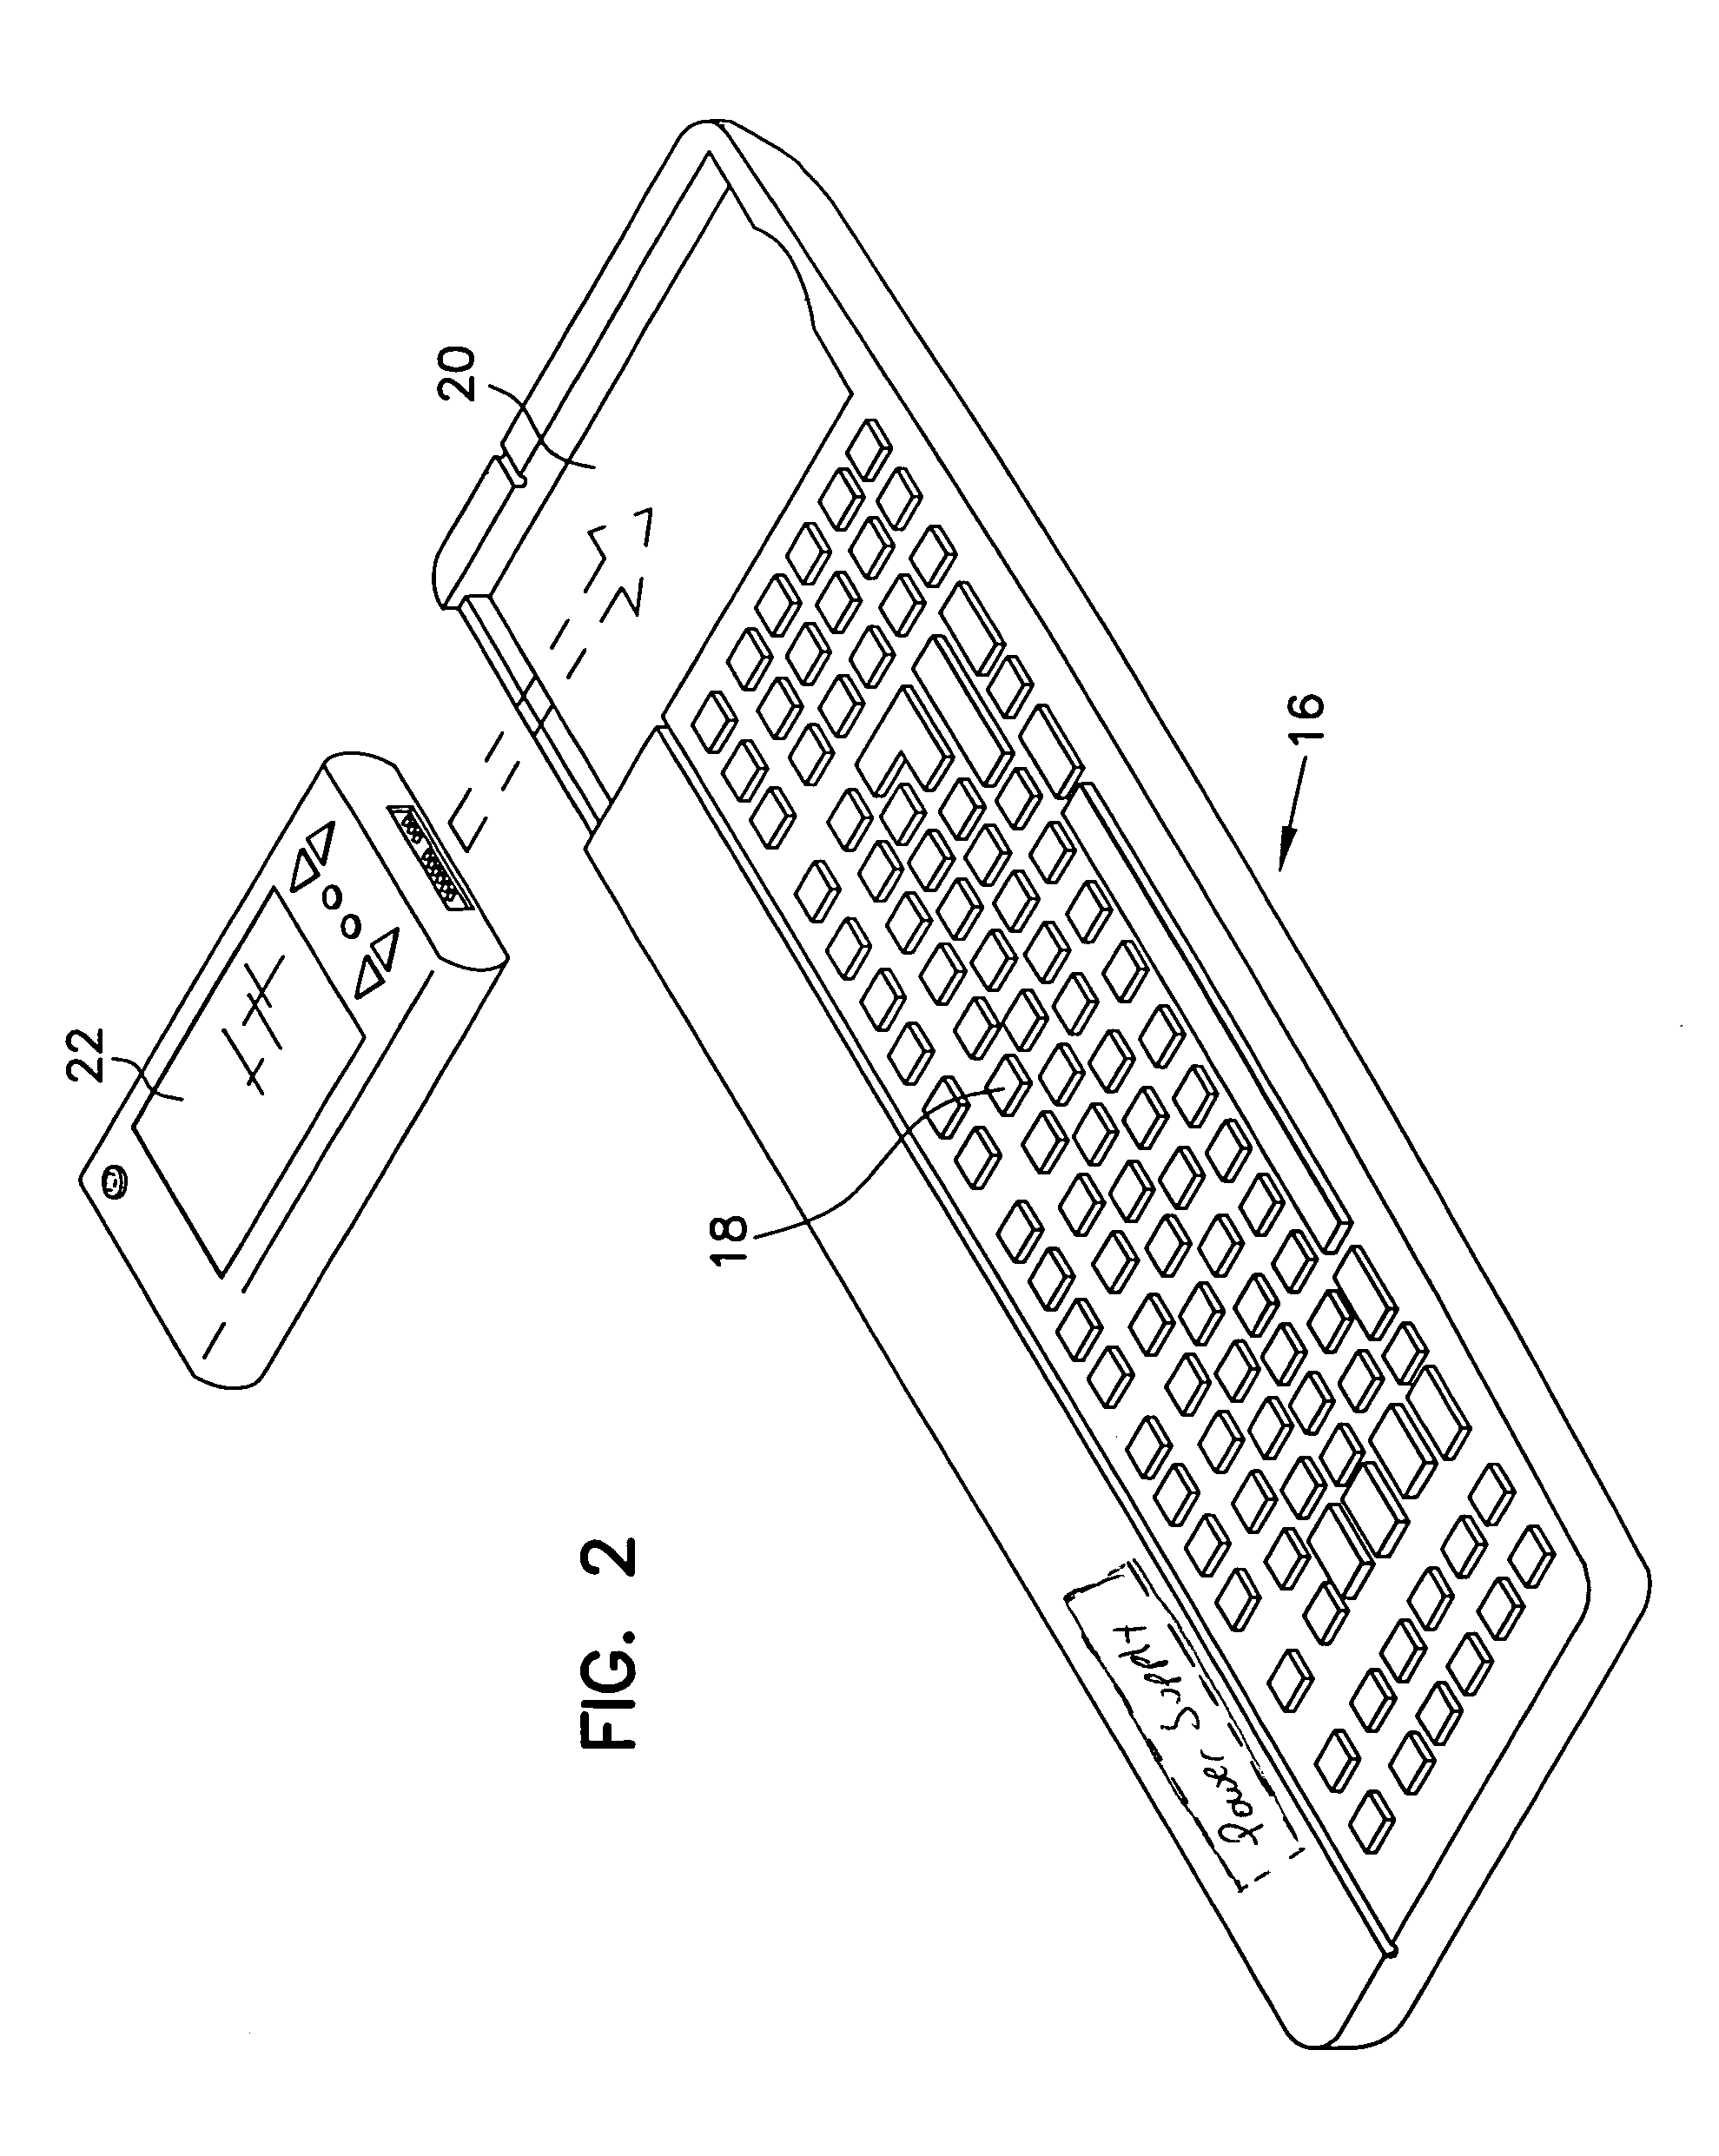 Modular computer device and computer keyboard for modular device